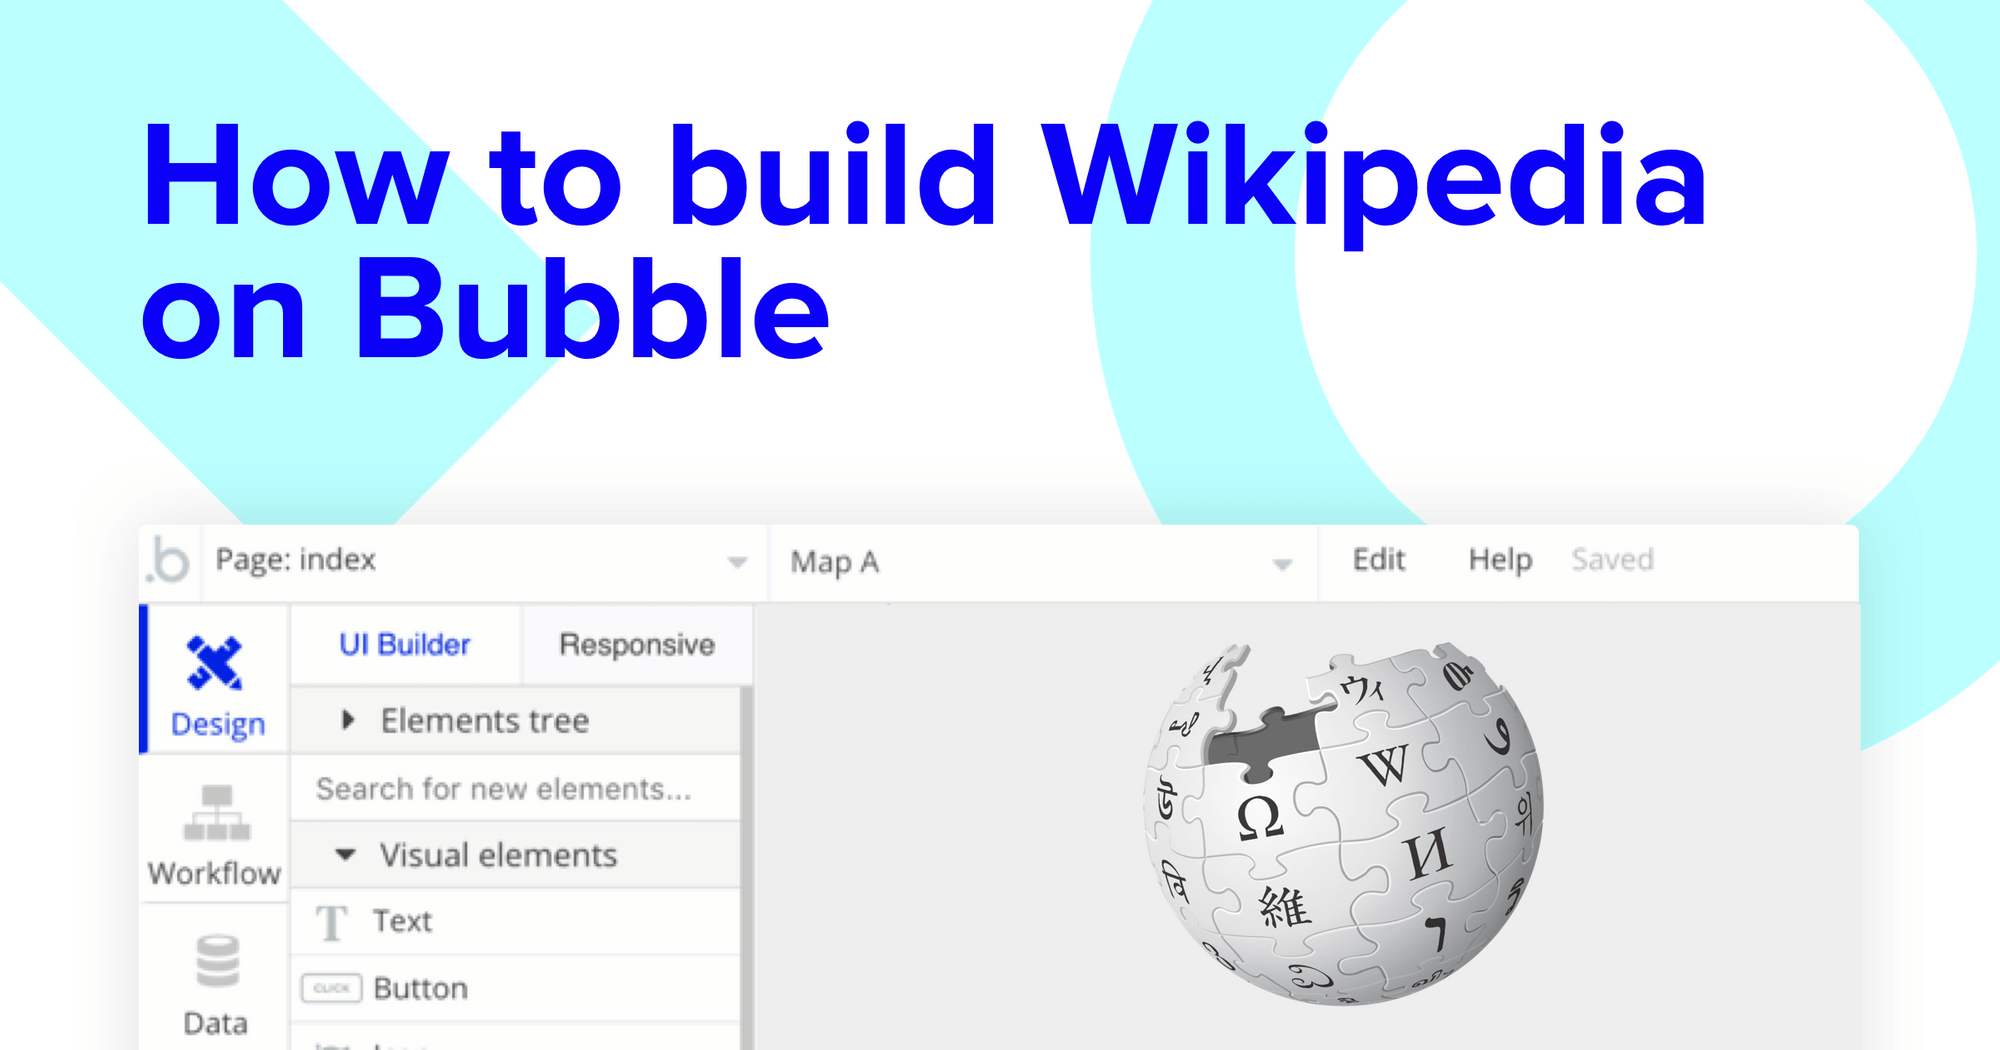 Bubbles, Wiki